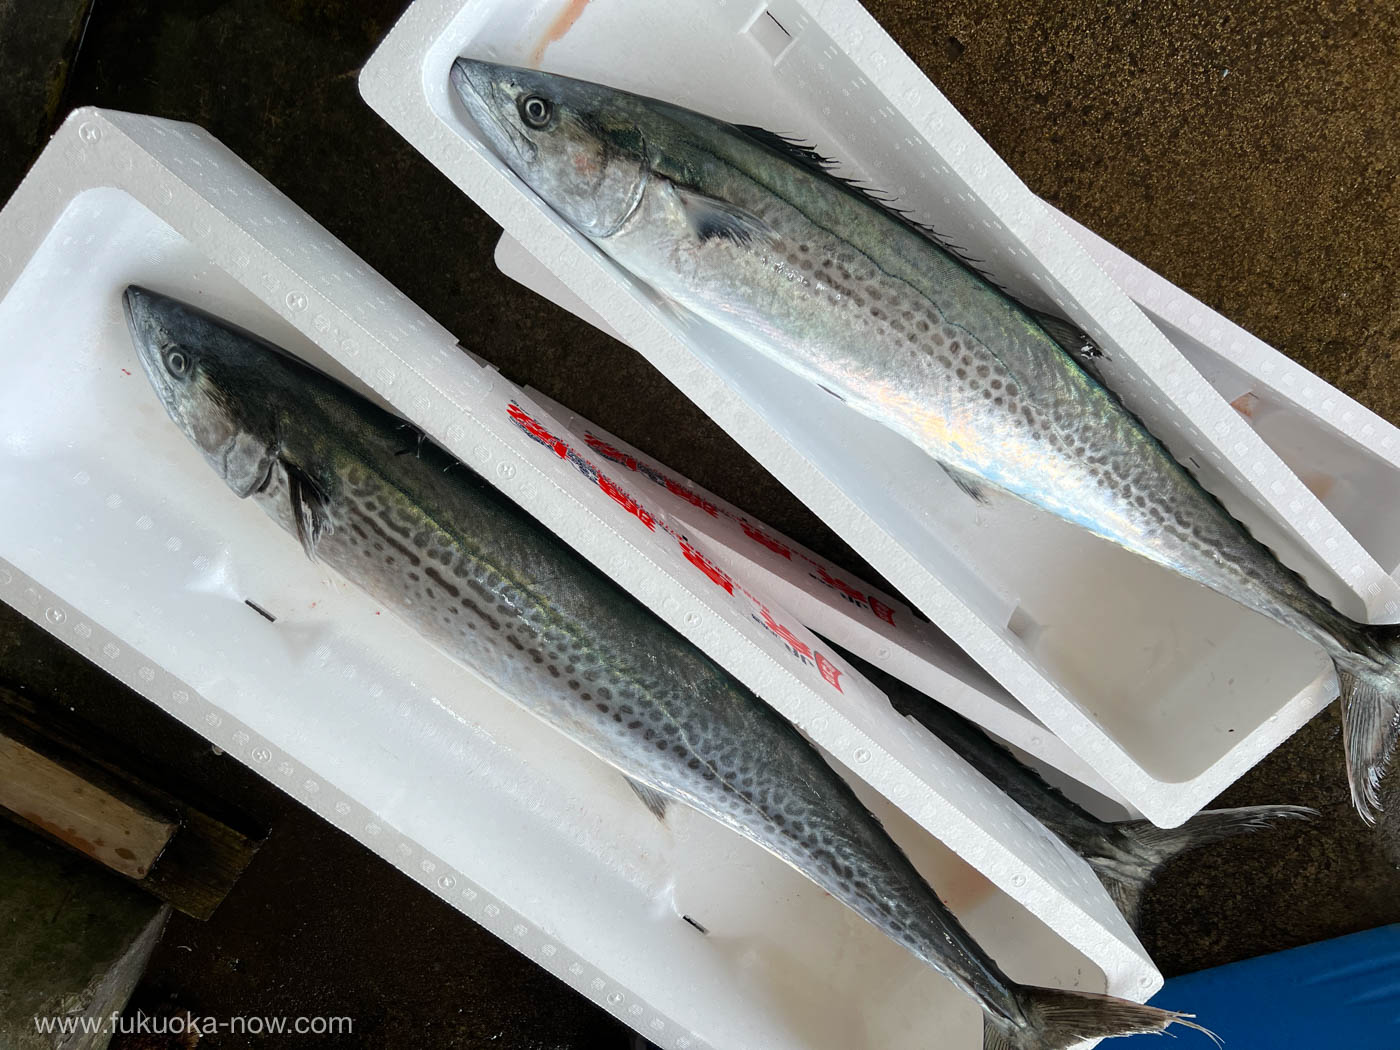 Spanish mackerel high-grade brand called “honsawara” 糸島の姫島で揚がるサワラは条件が揃うと「本鰆」という高級ブランド魚になる